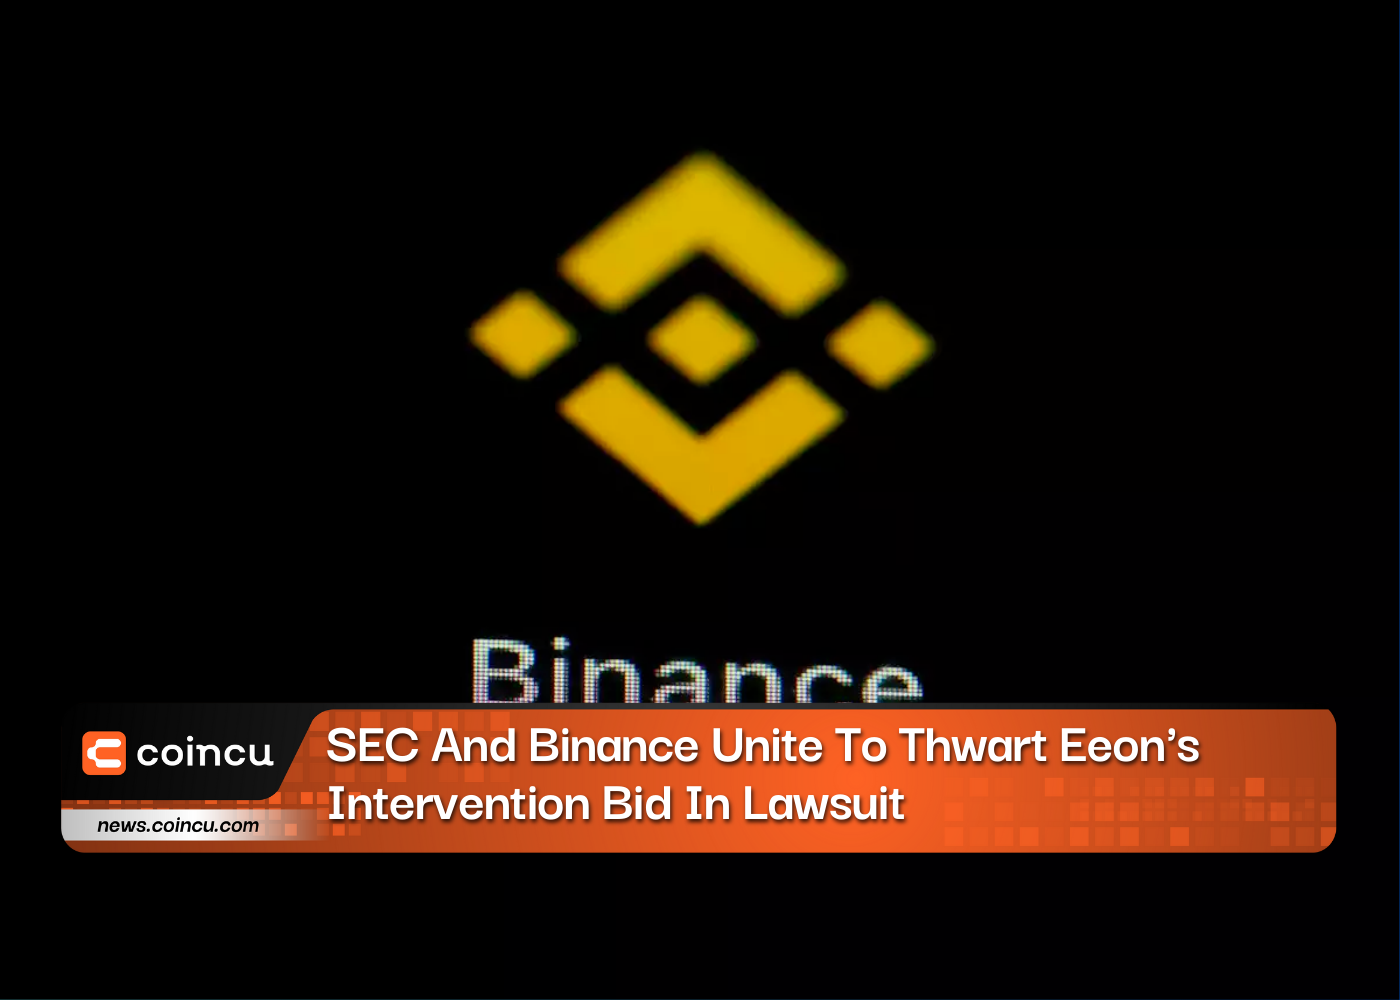 SEC And Binance Unite To Thwart Eeon's Intervention Bid In Lawsuit